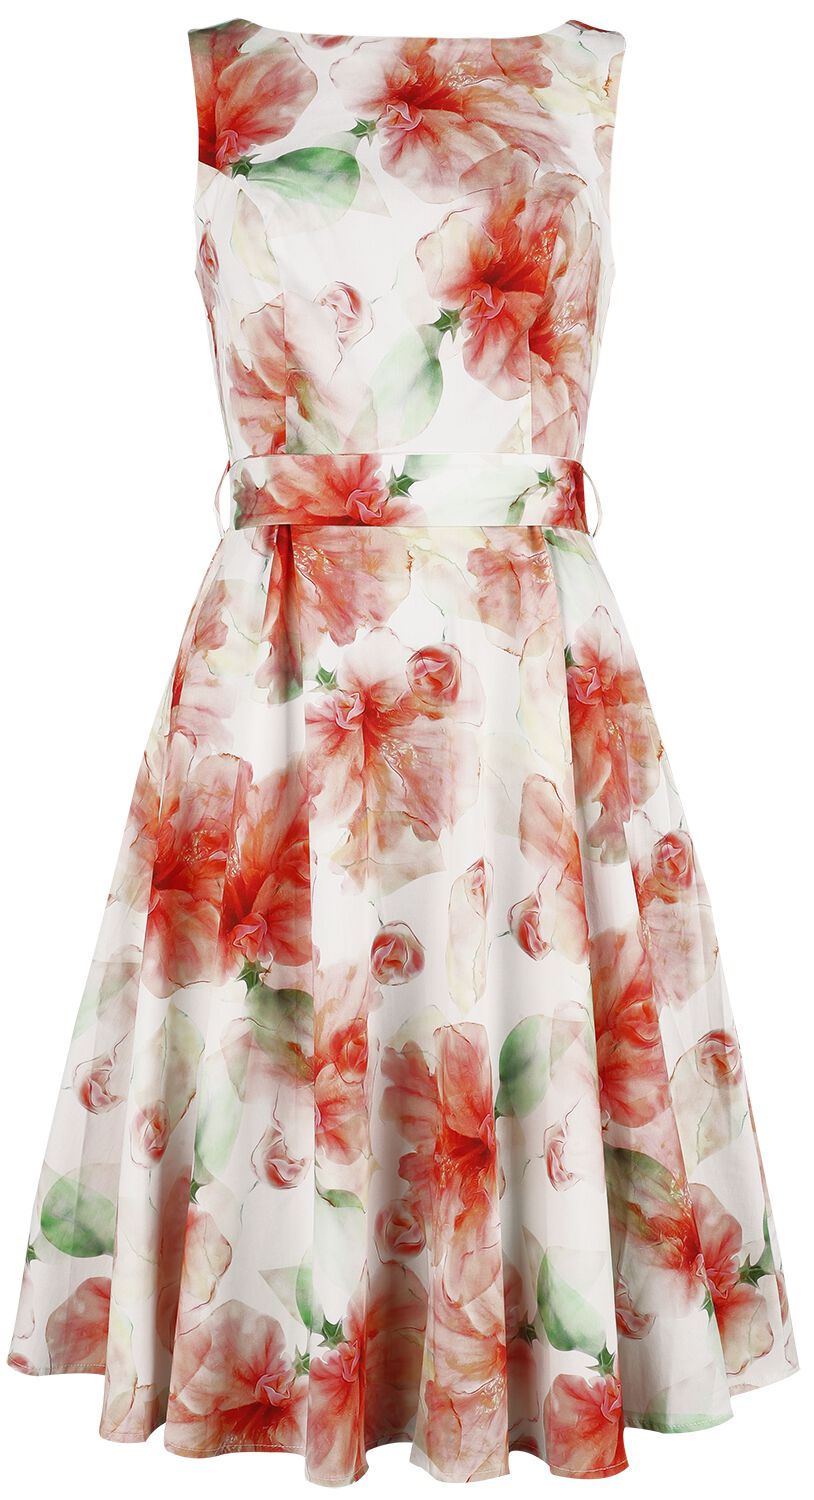 H&R London - Rockabilly Kleid knielang - Ayla Floral Swing Dress - XS bis 4XL - für Damen - Größe 3XL - multicolor